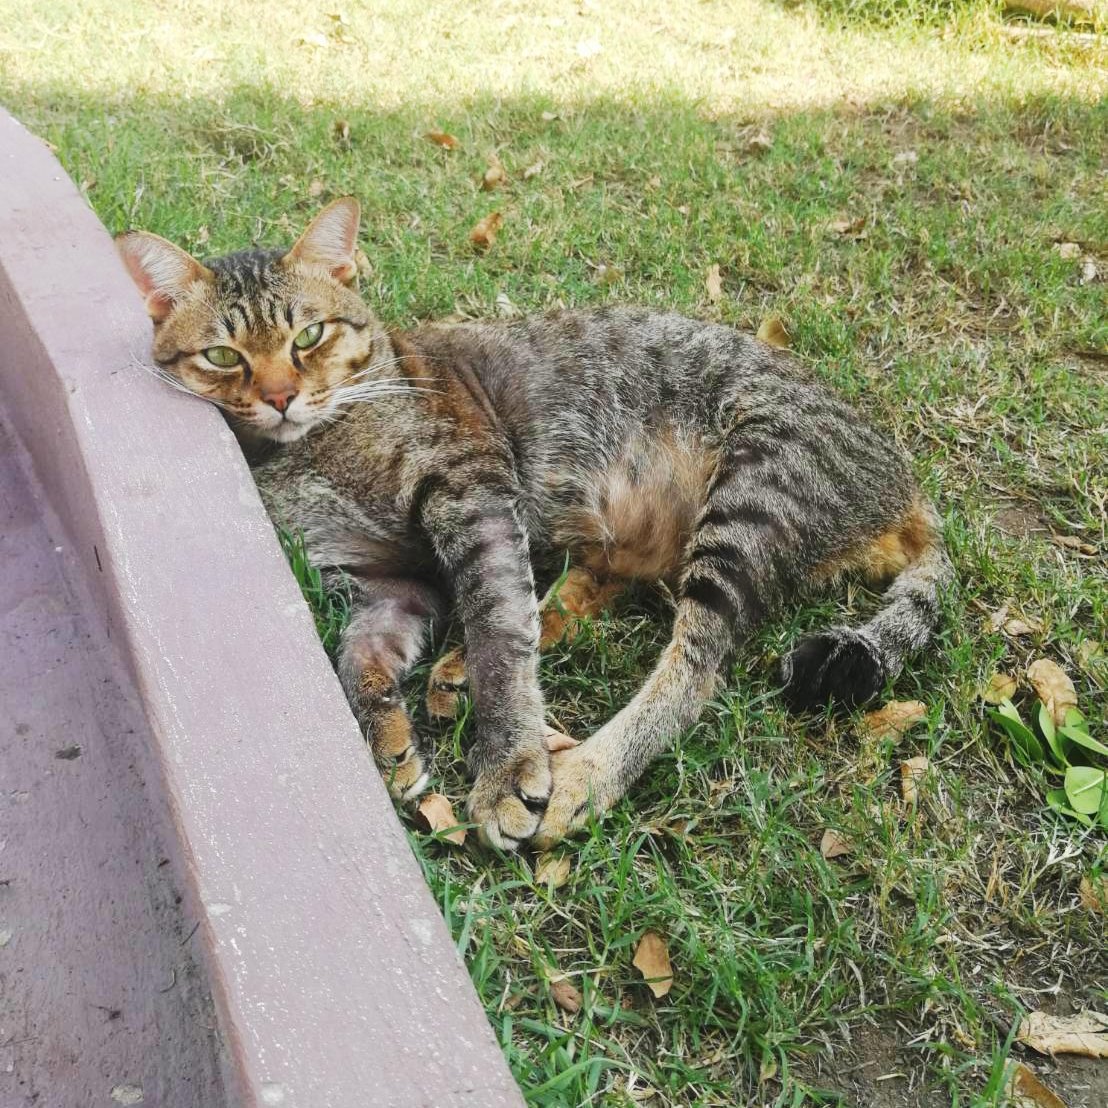 Everyone deserves a day off. Mr Mowgli.
#catsofinstagram #cat #catsoftwitter #cats #catstagram #lovemycat #kitties #kittens #kitten #kittensofinstagram #kittensareawesome #catsareawesome #cutecats #cutecat #catsarecute #catrescue #spayandneuter #spayed #neutered #adoptdontshop